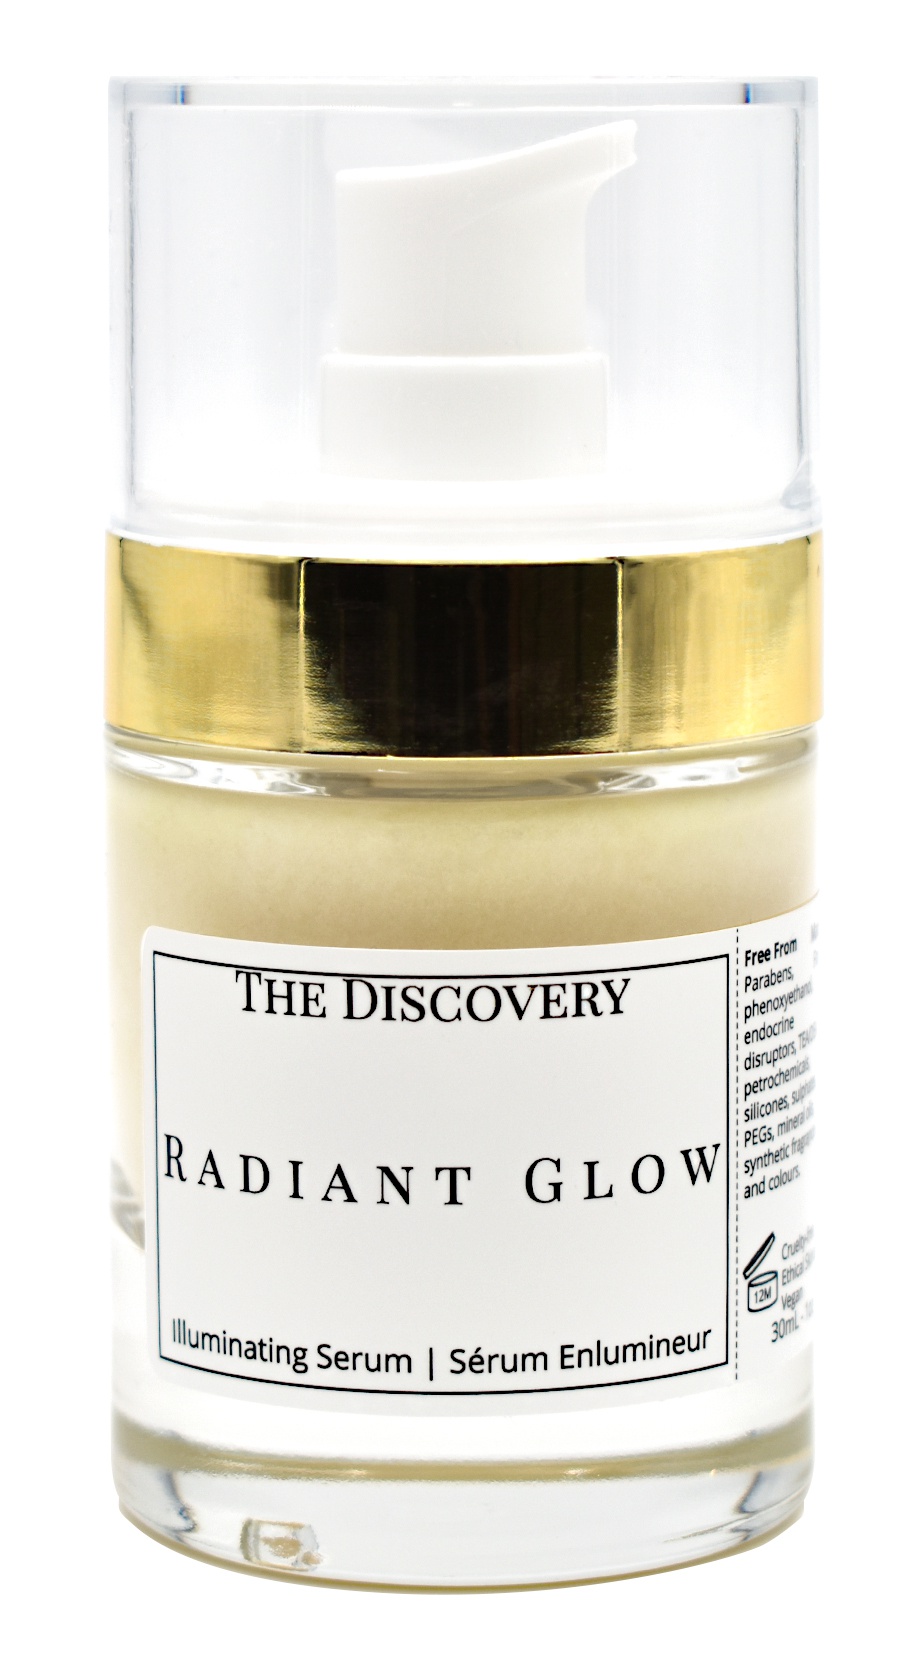 The Discovery Radiant Glow - Illuminating Serum